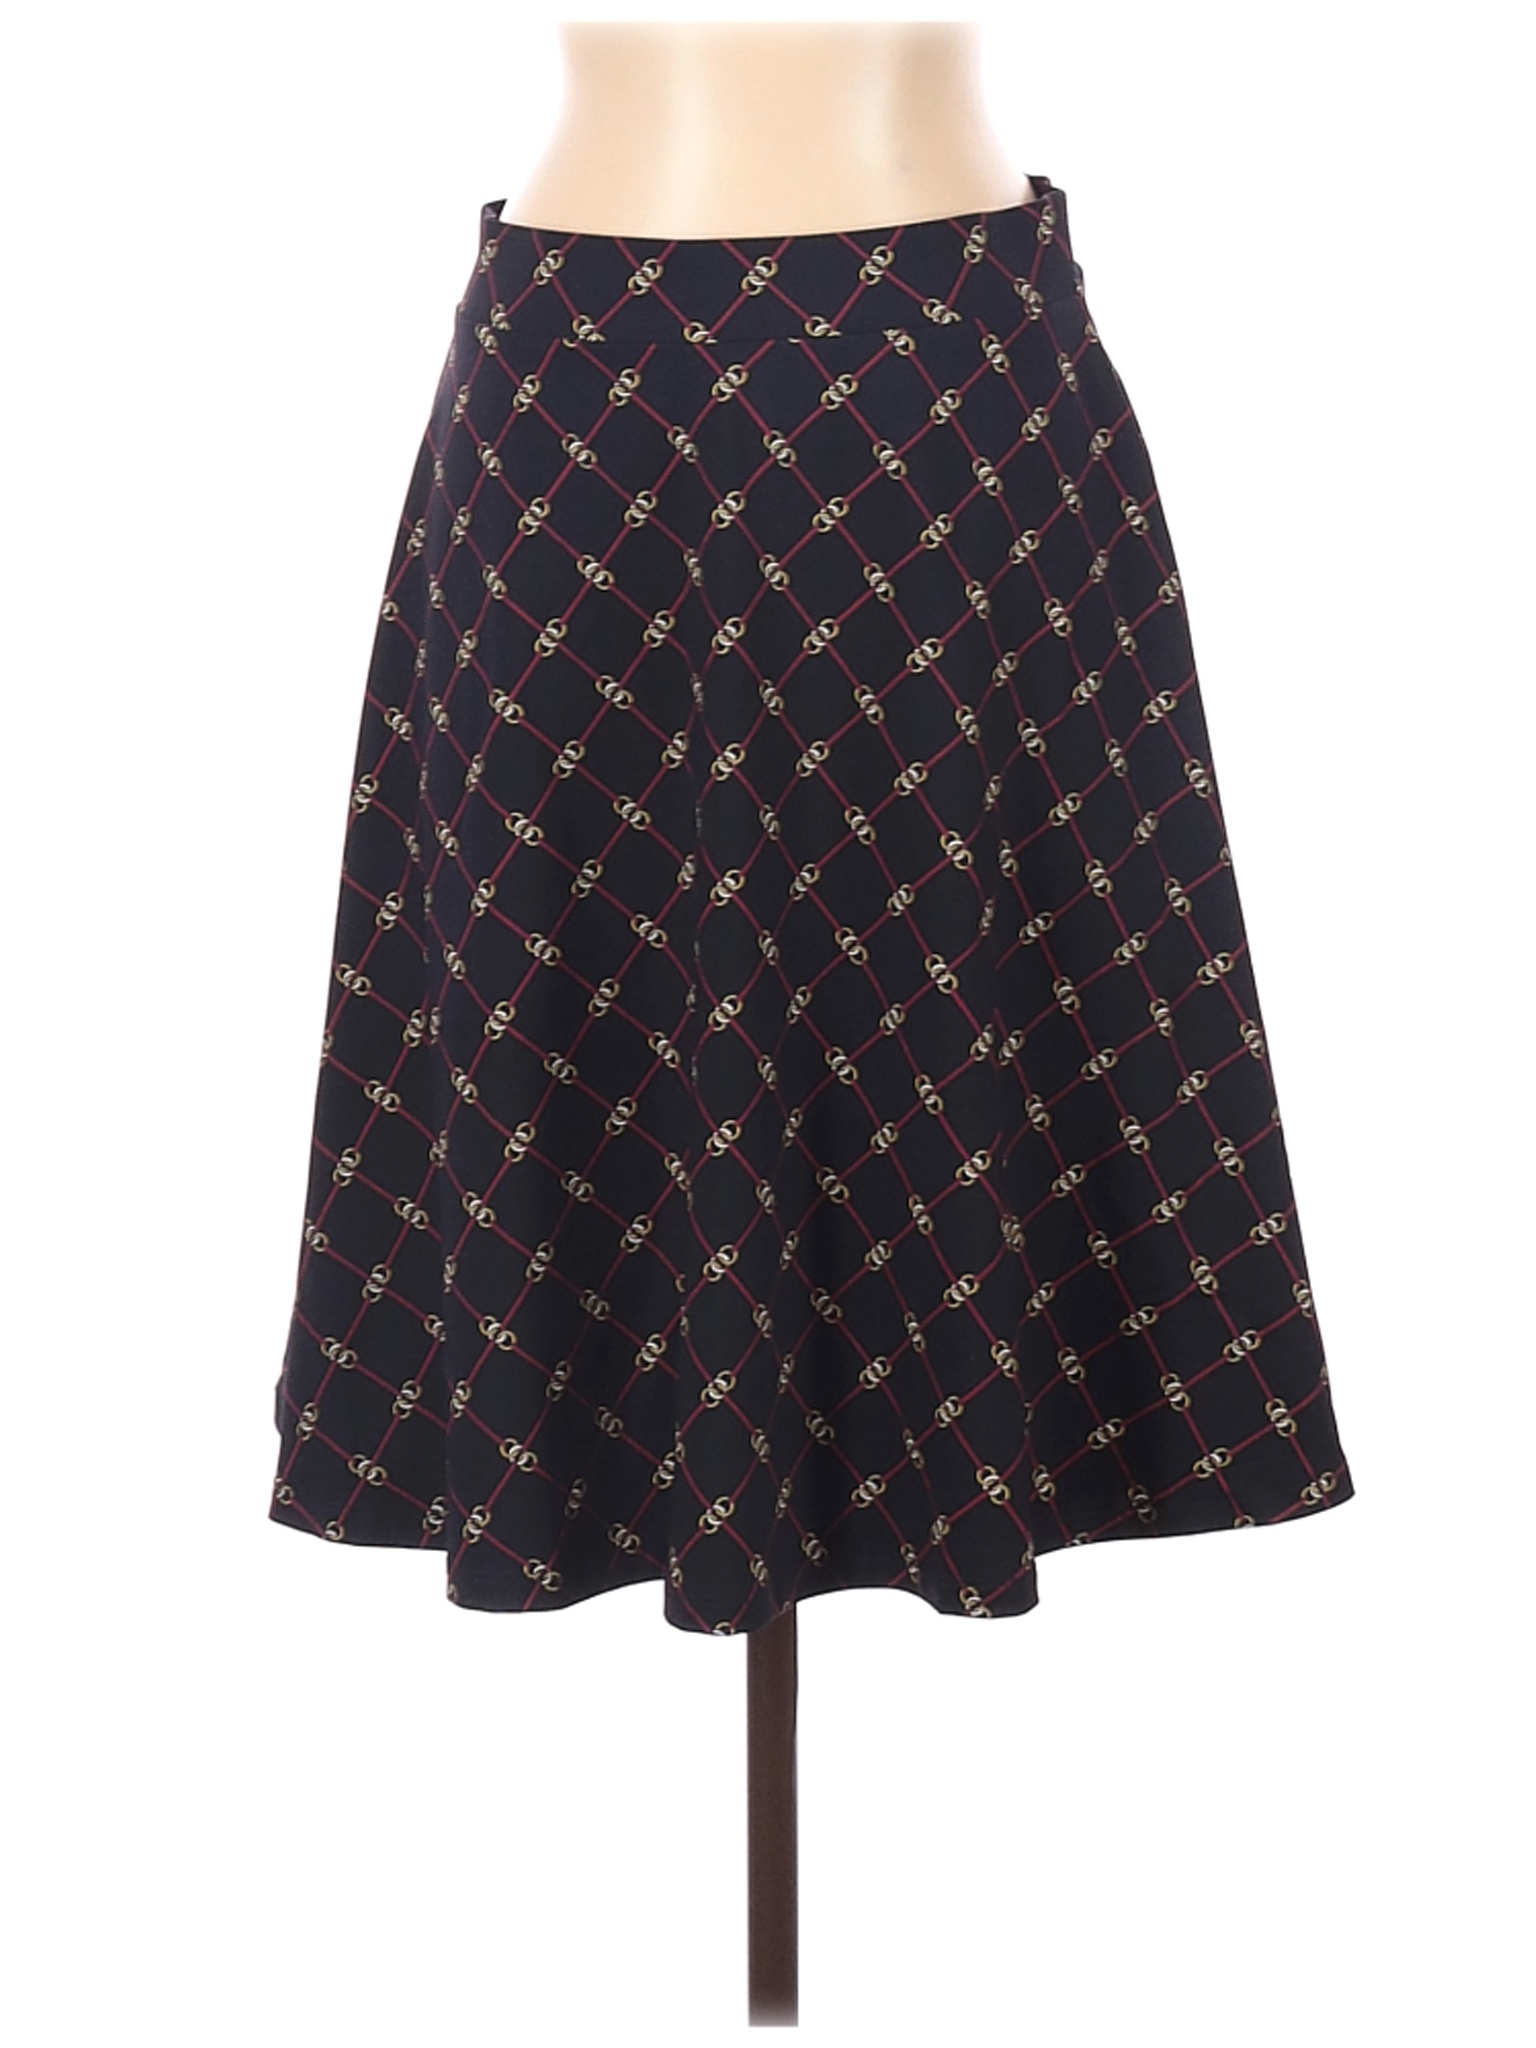 NWT Talbots Women Black Casual Skirt XS | eBay